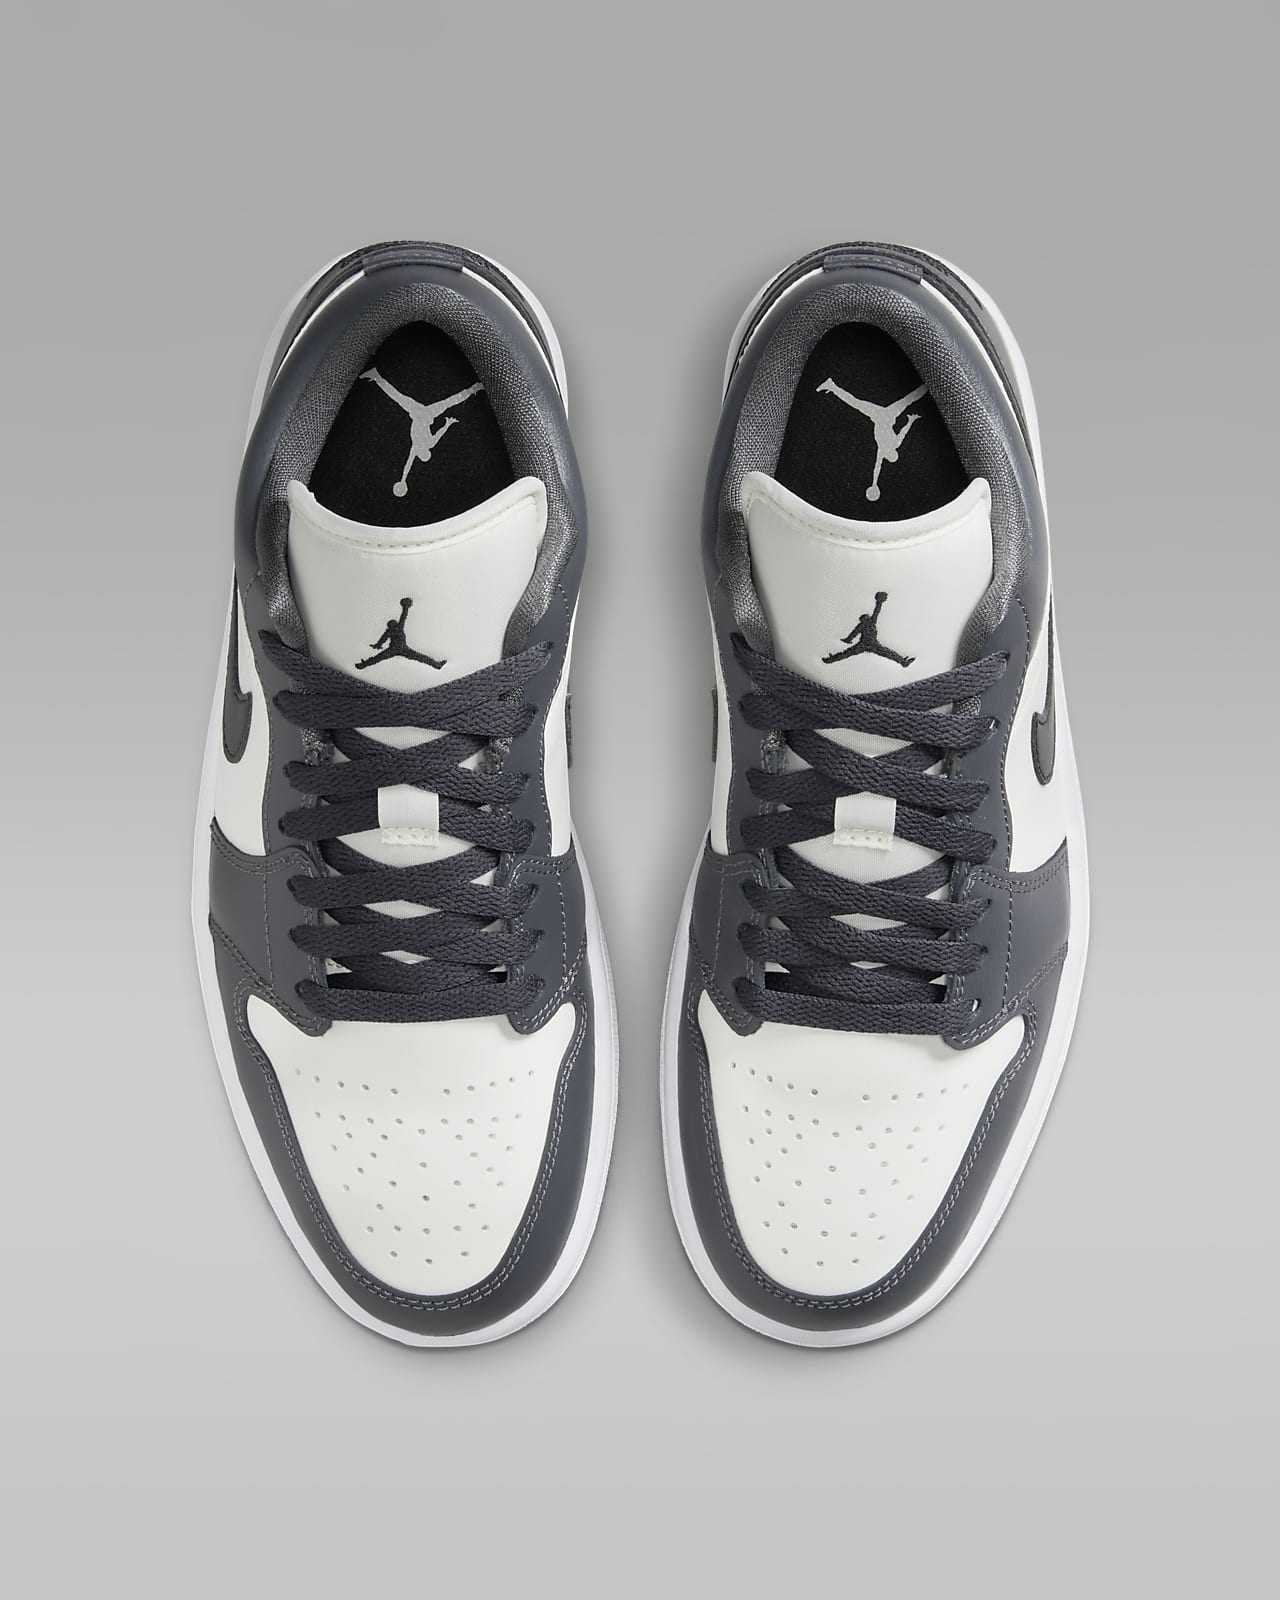 Air Jordan 1 低筒女鞋。Nike TW